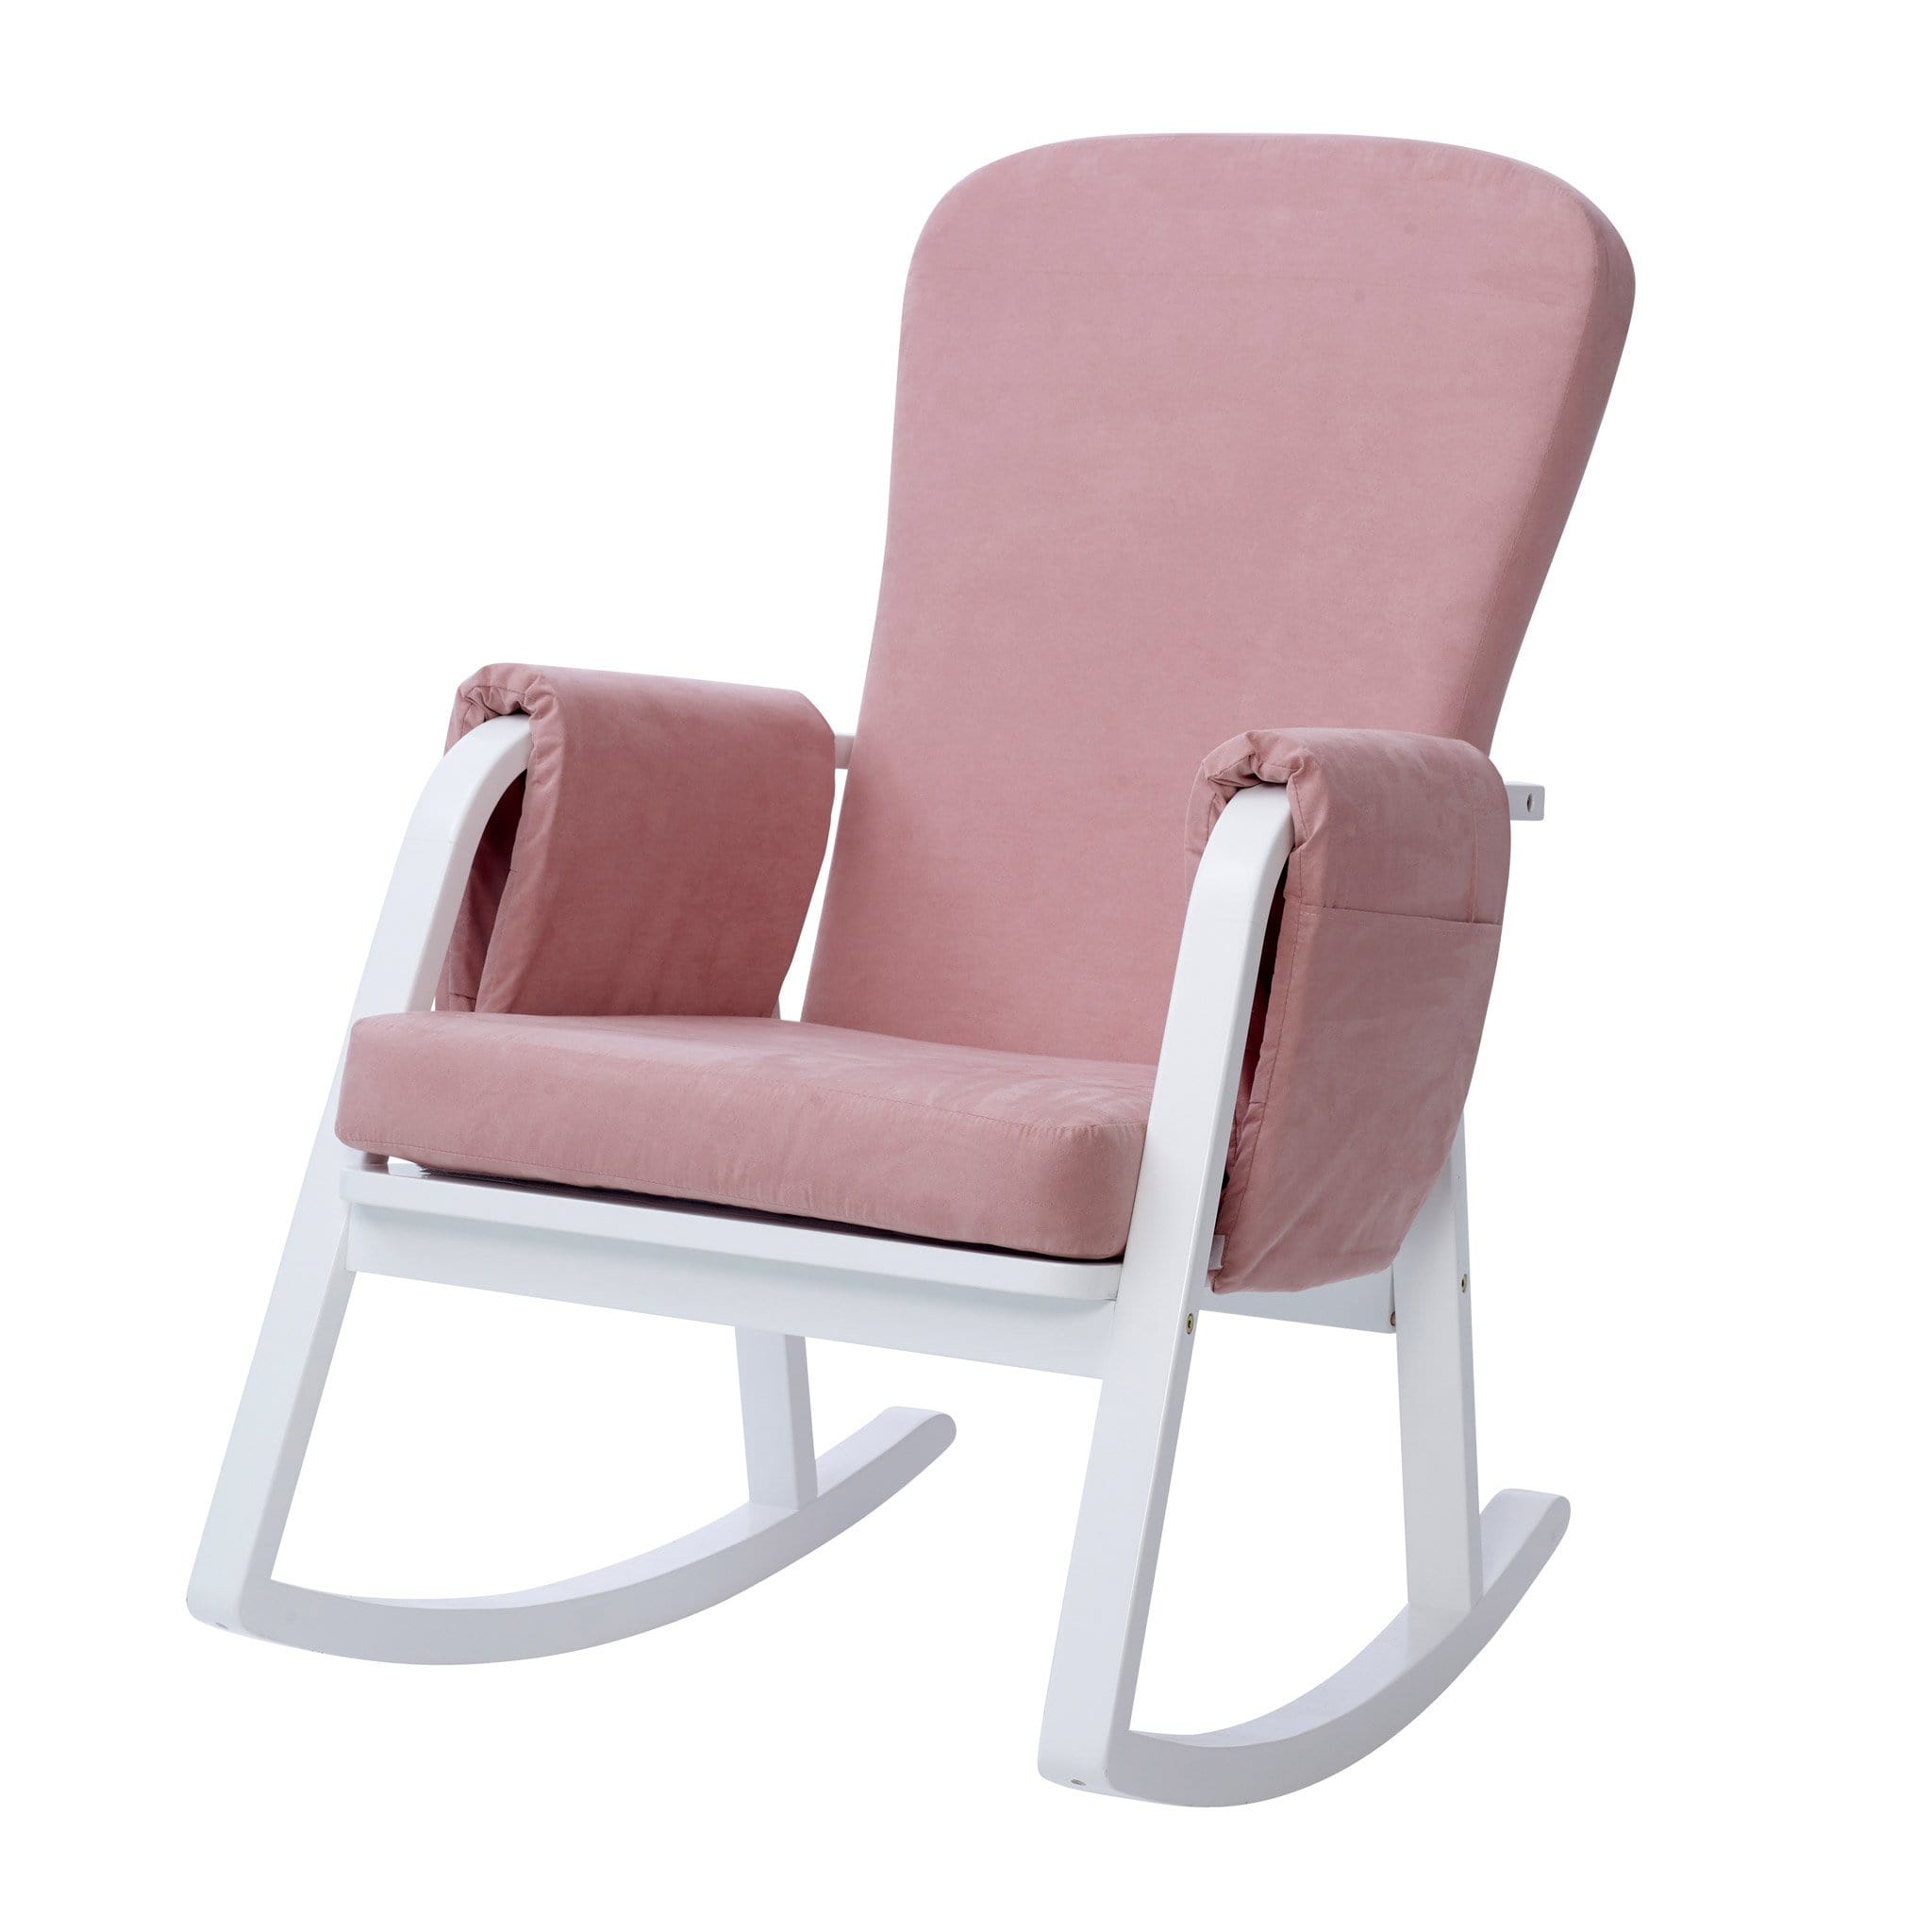 Ickle Bubba Dursley Rocking Chair Blush Pink Nursing Chairs 48-004-000-841 5060738074310